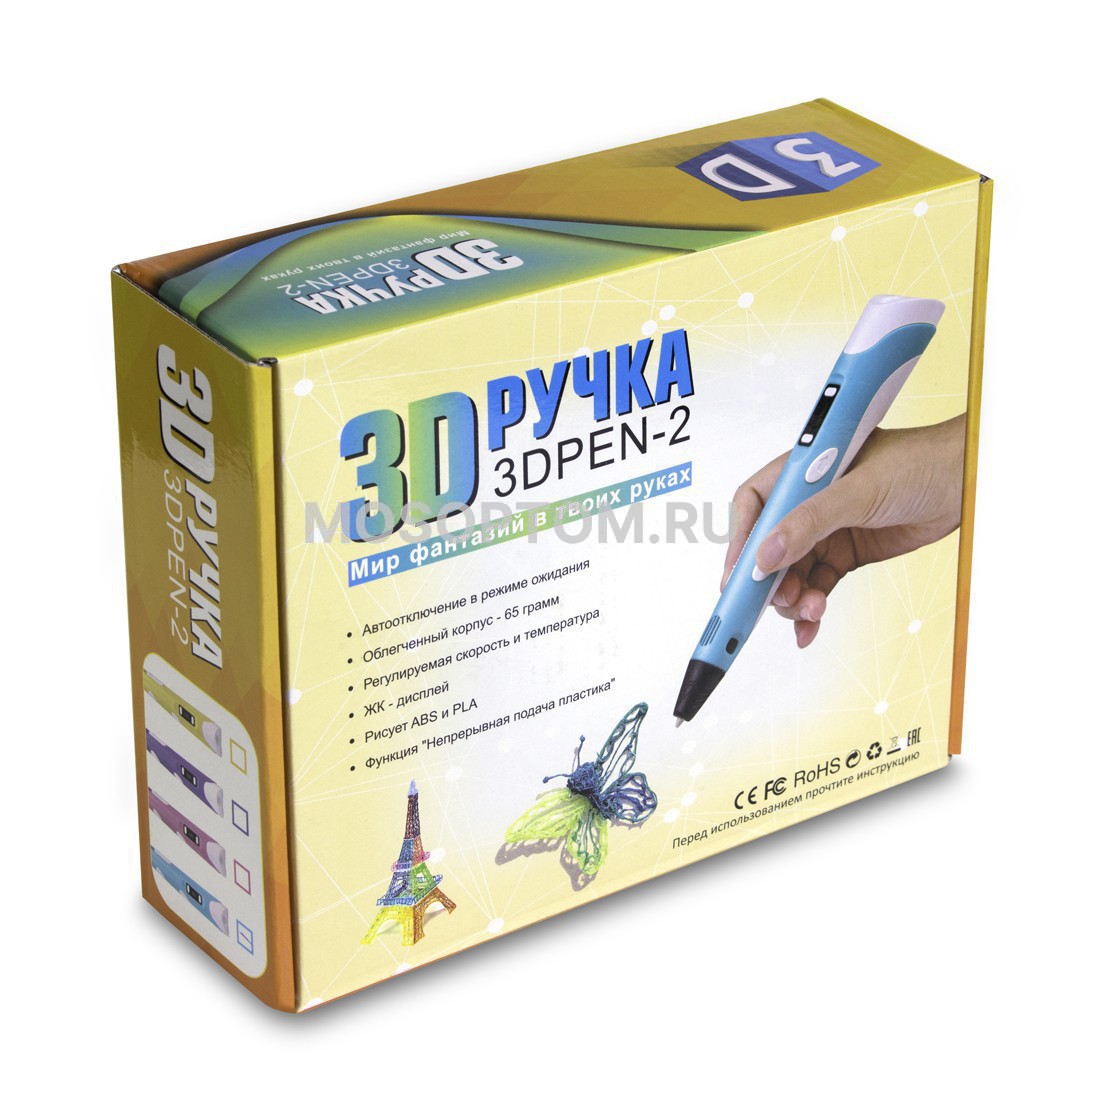 3D Ручка Printing Pen-2 оптом